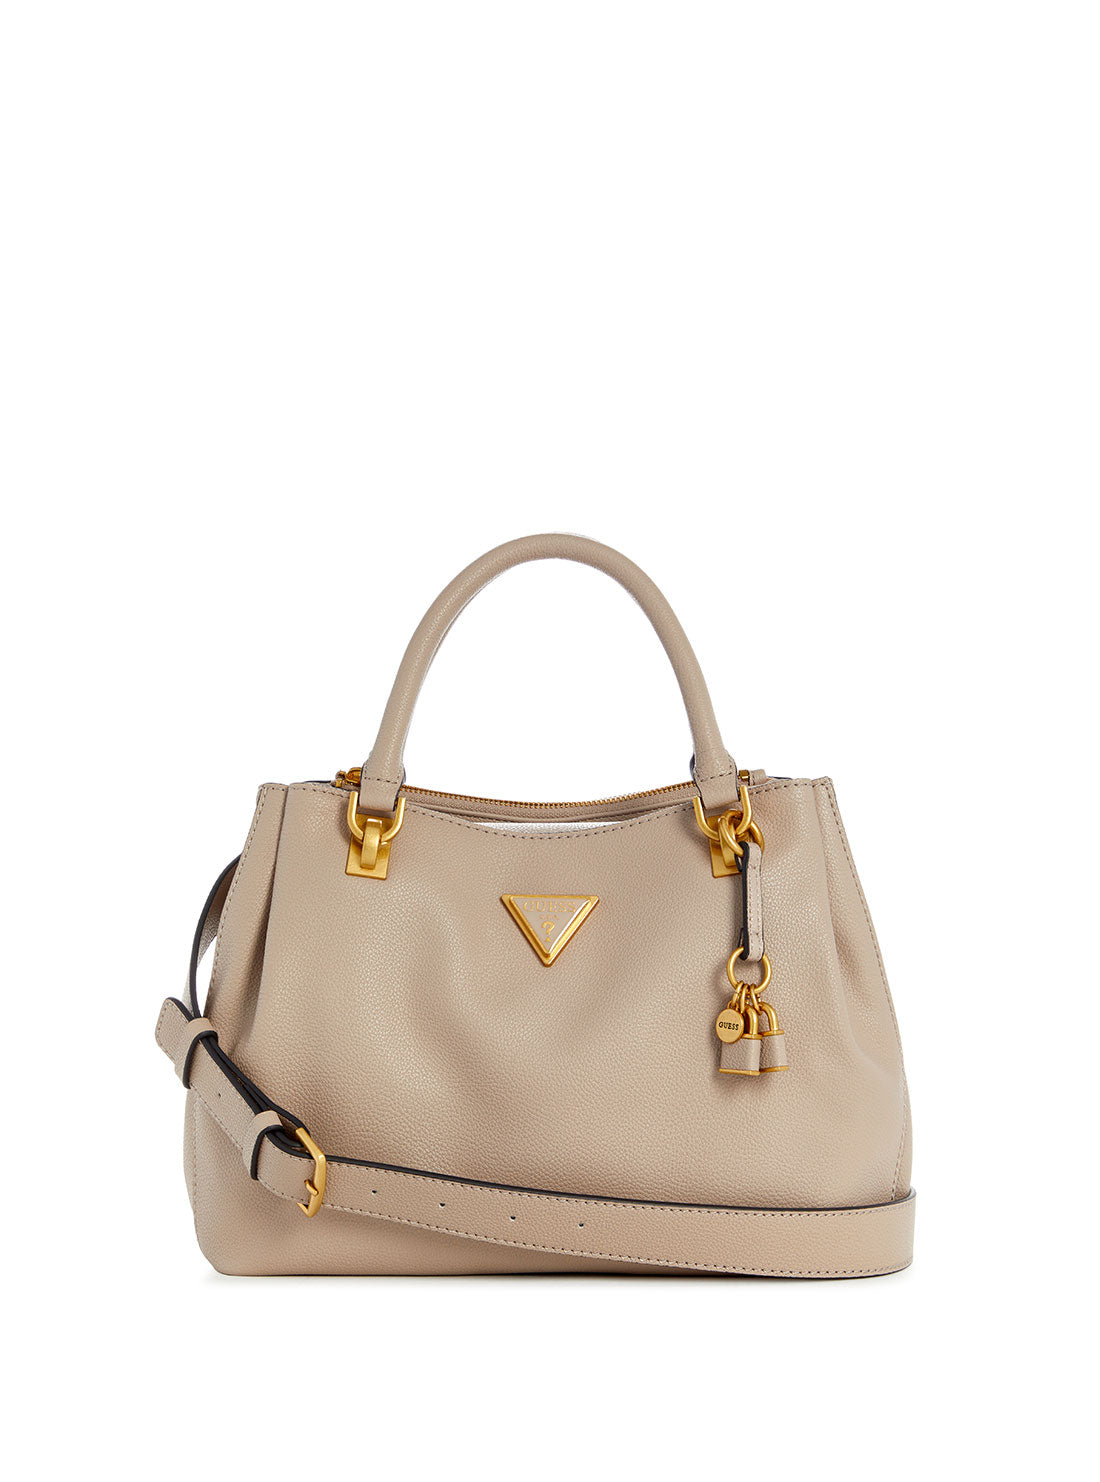 GUESS Beige Cosette Luxury Satchel Bag front view